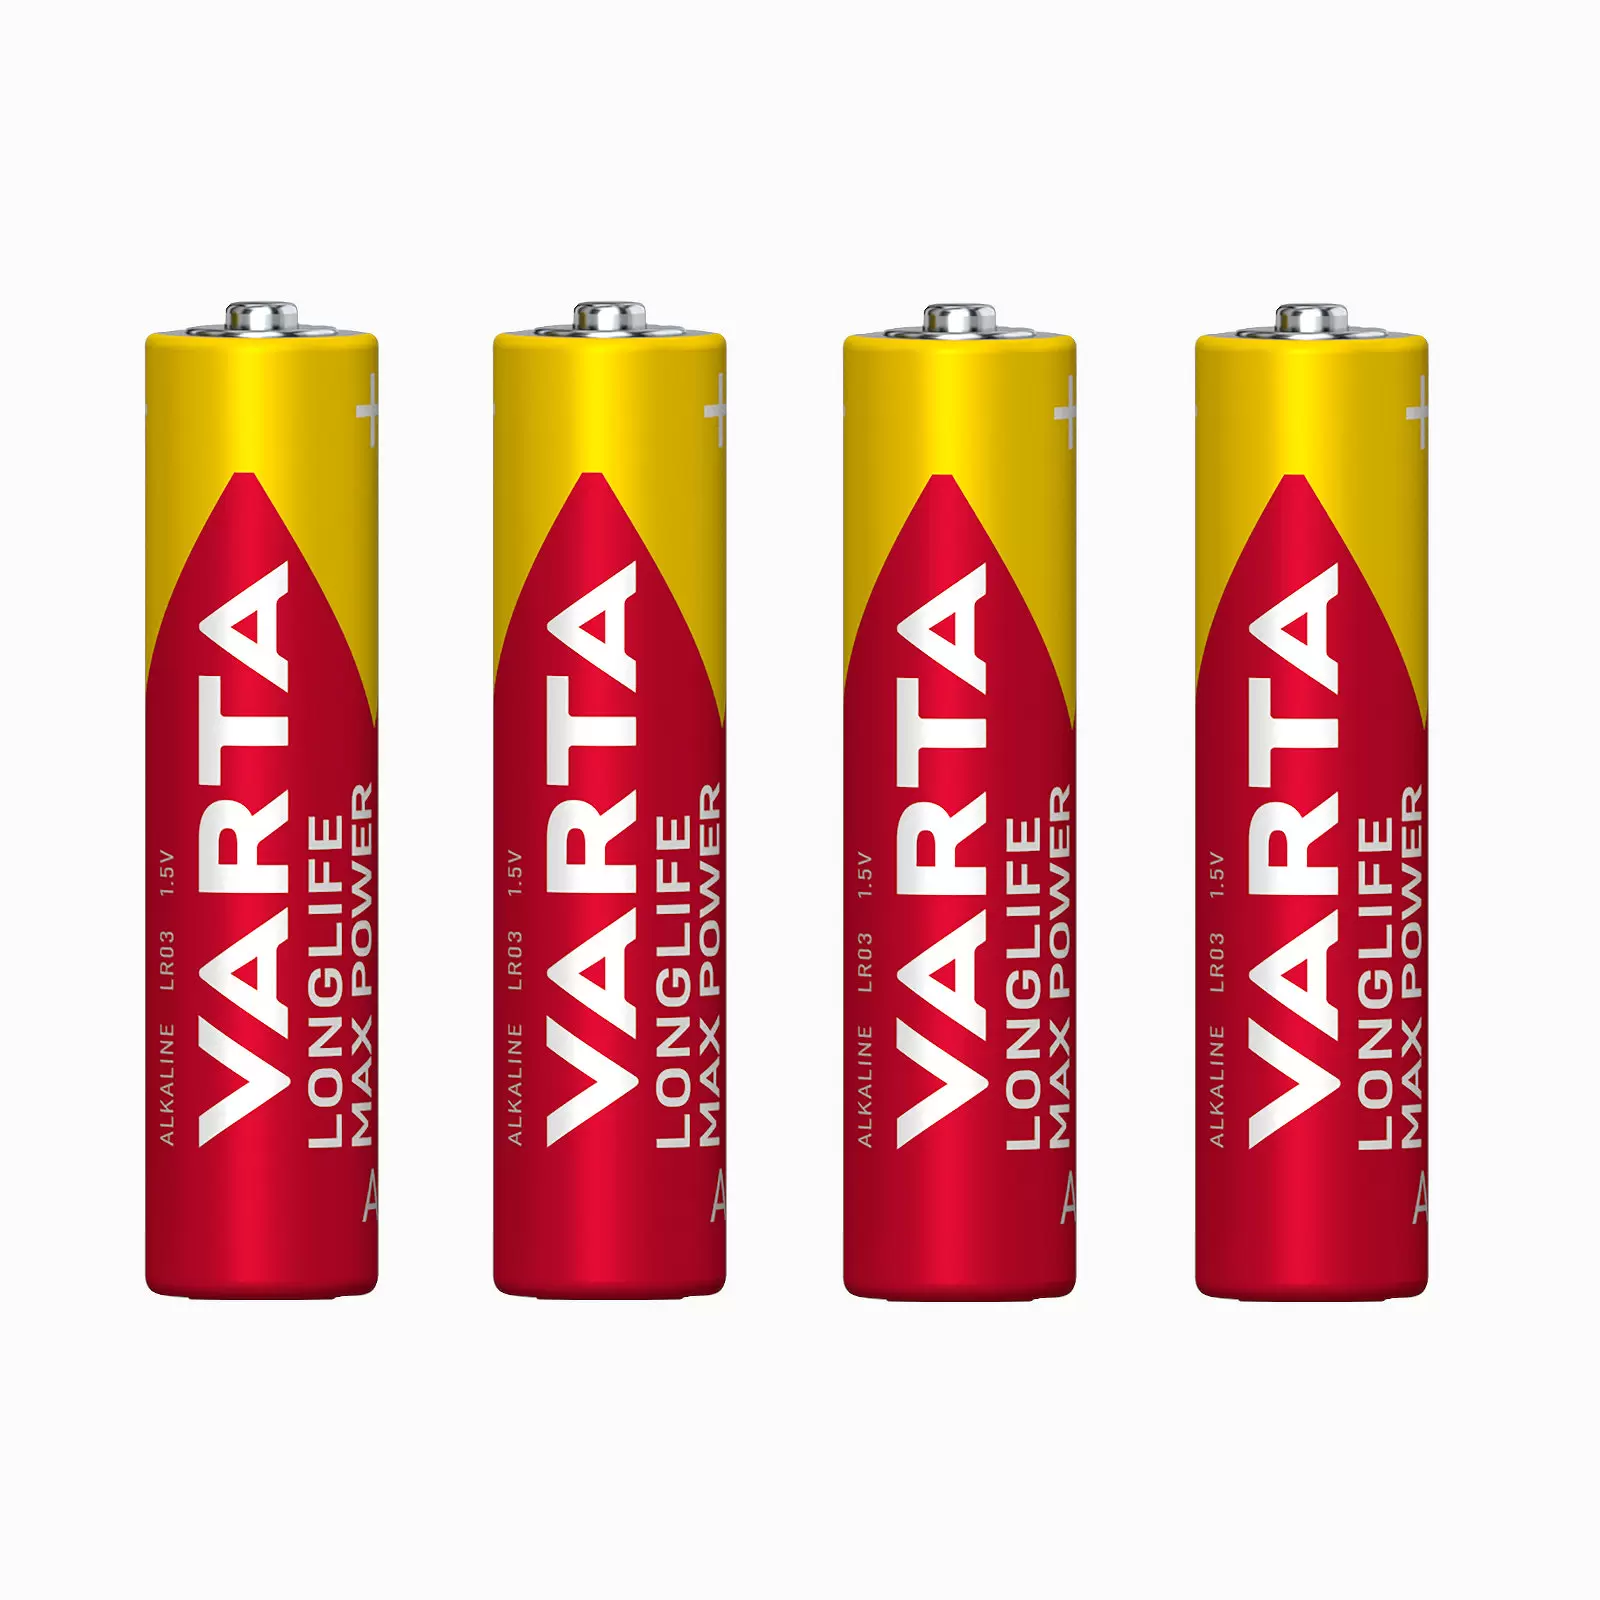 Varta Batterien AAA LR03 Alkaline Micro Longlife Max Power 1,5V 4er Blister